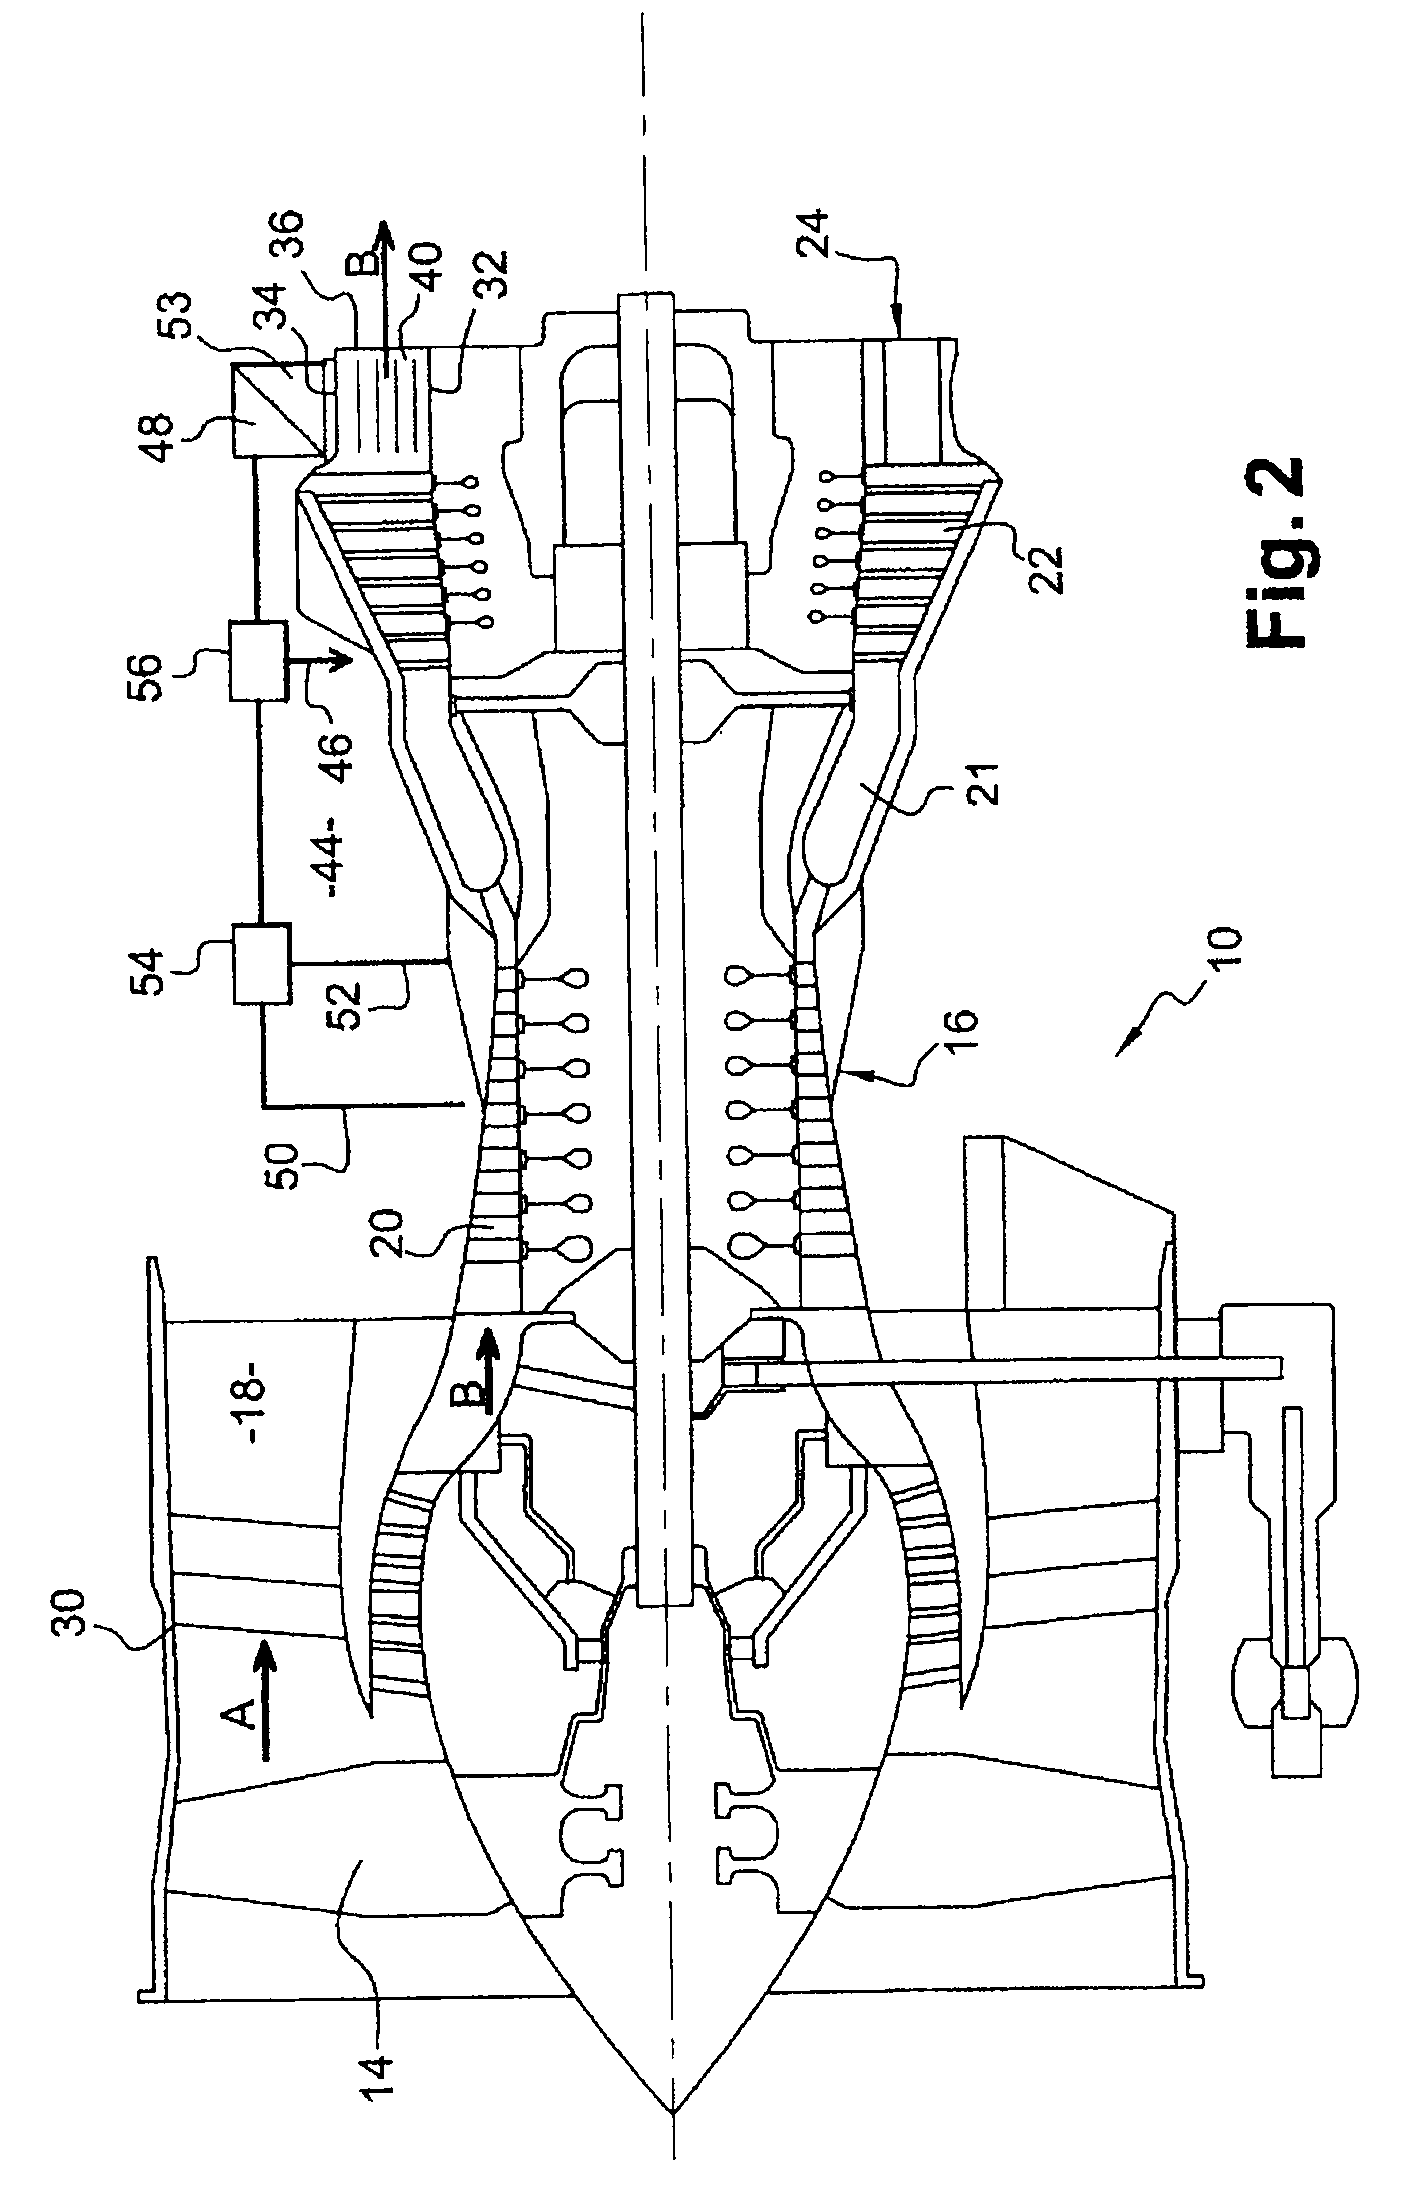 Component ventilation and pressurization in a turbomachine